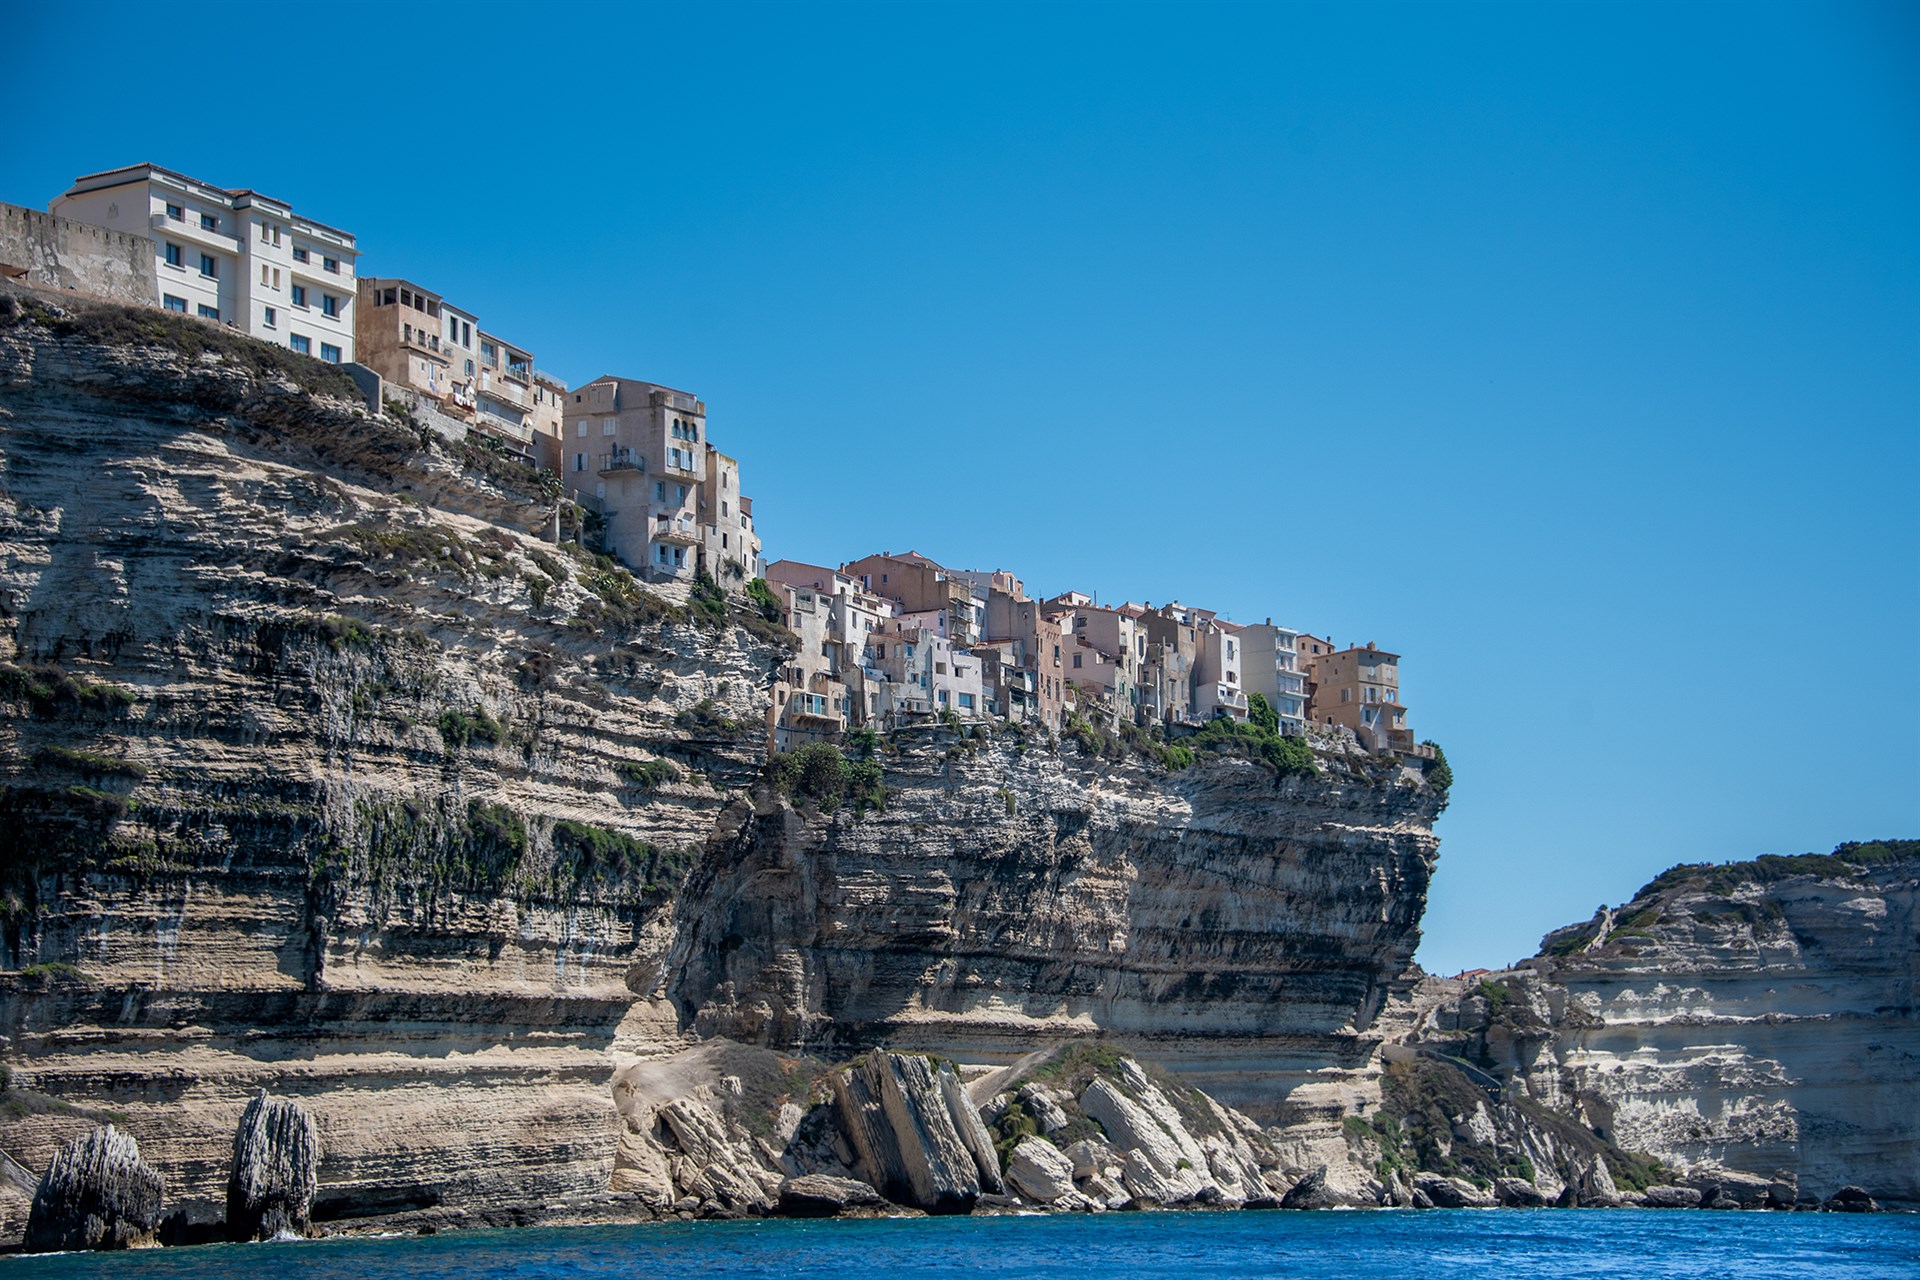 Find All of the Mediterranean’s Top Hidden Gems This Year